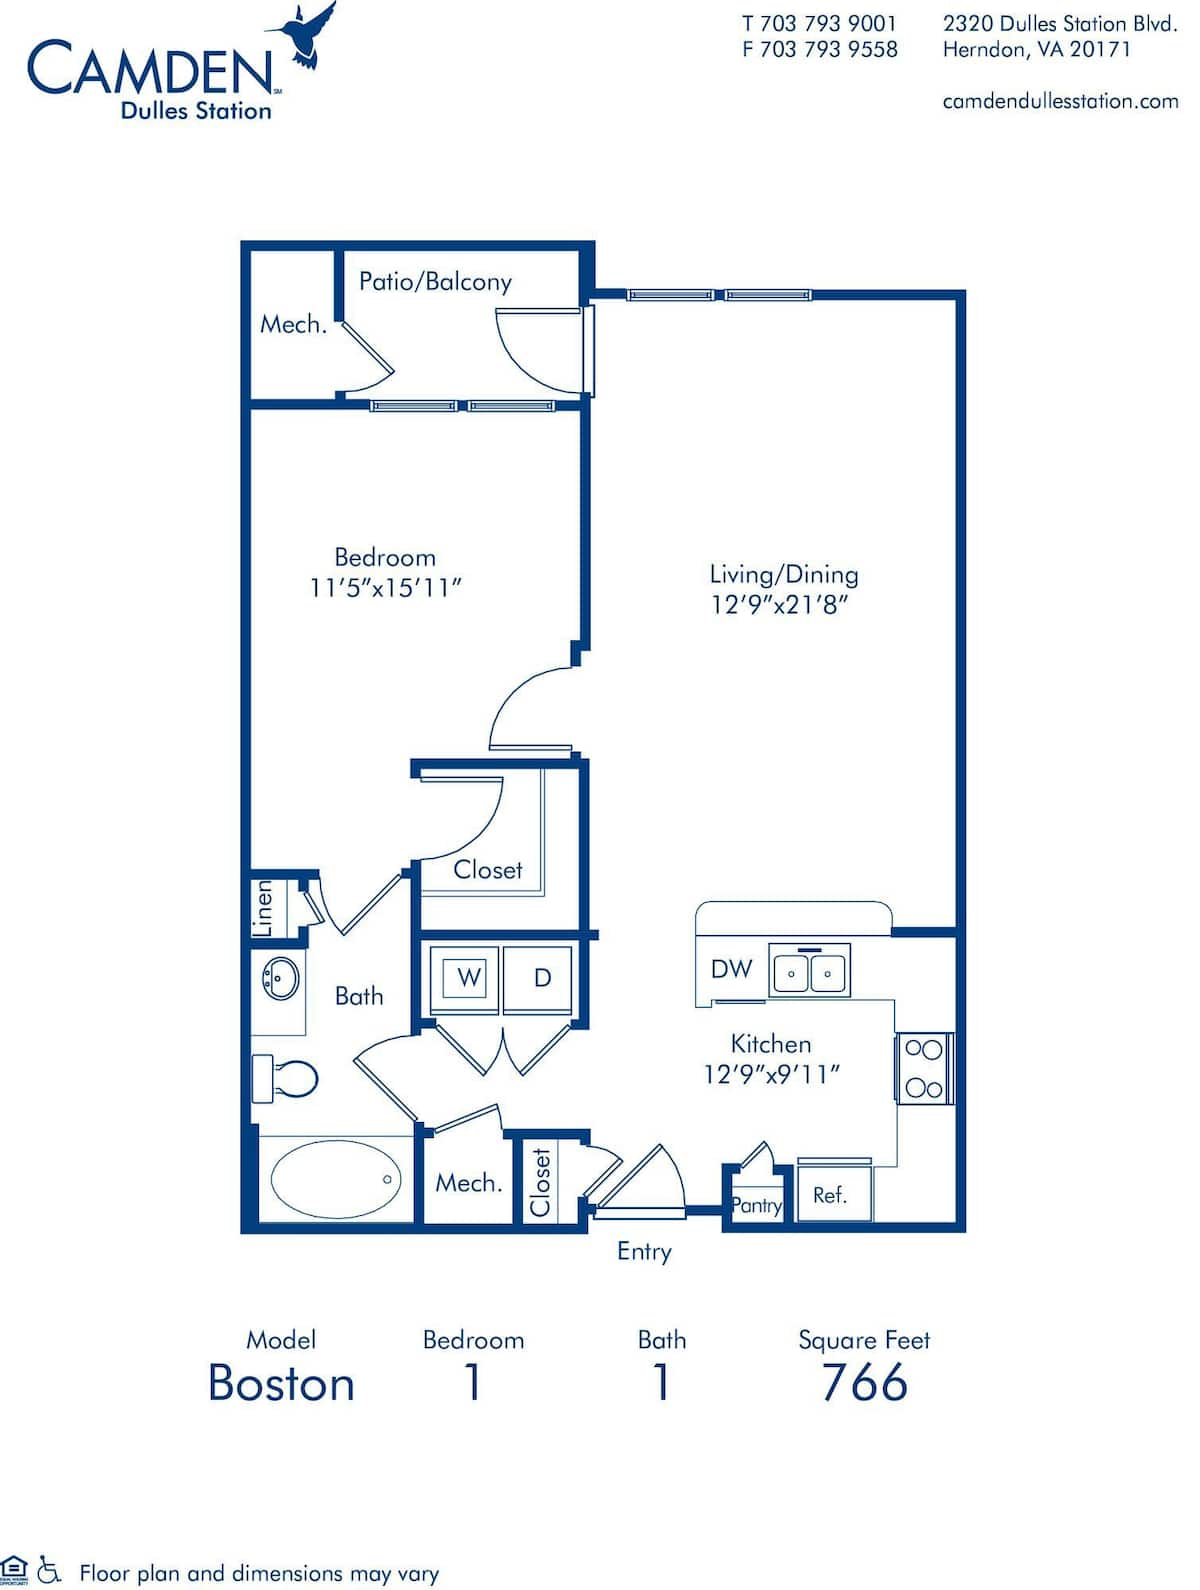 Floorplan diagram for Boston, showing 1 bedroom